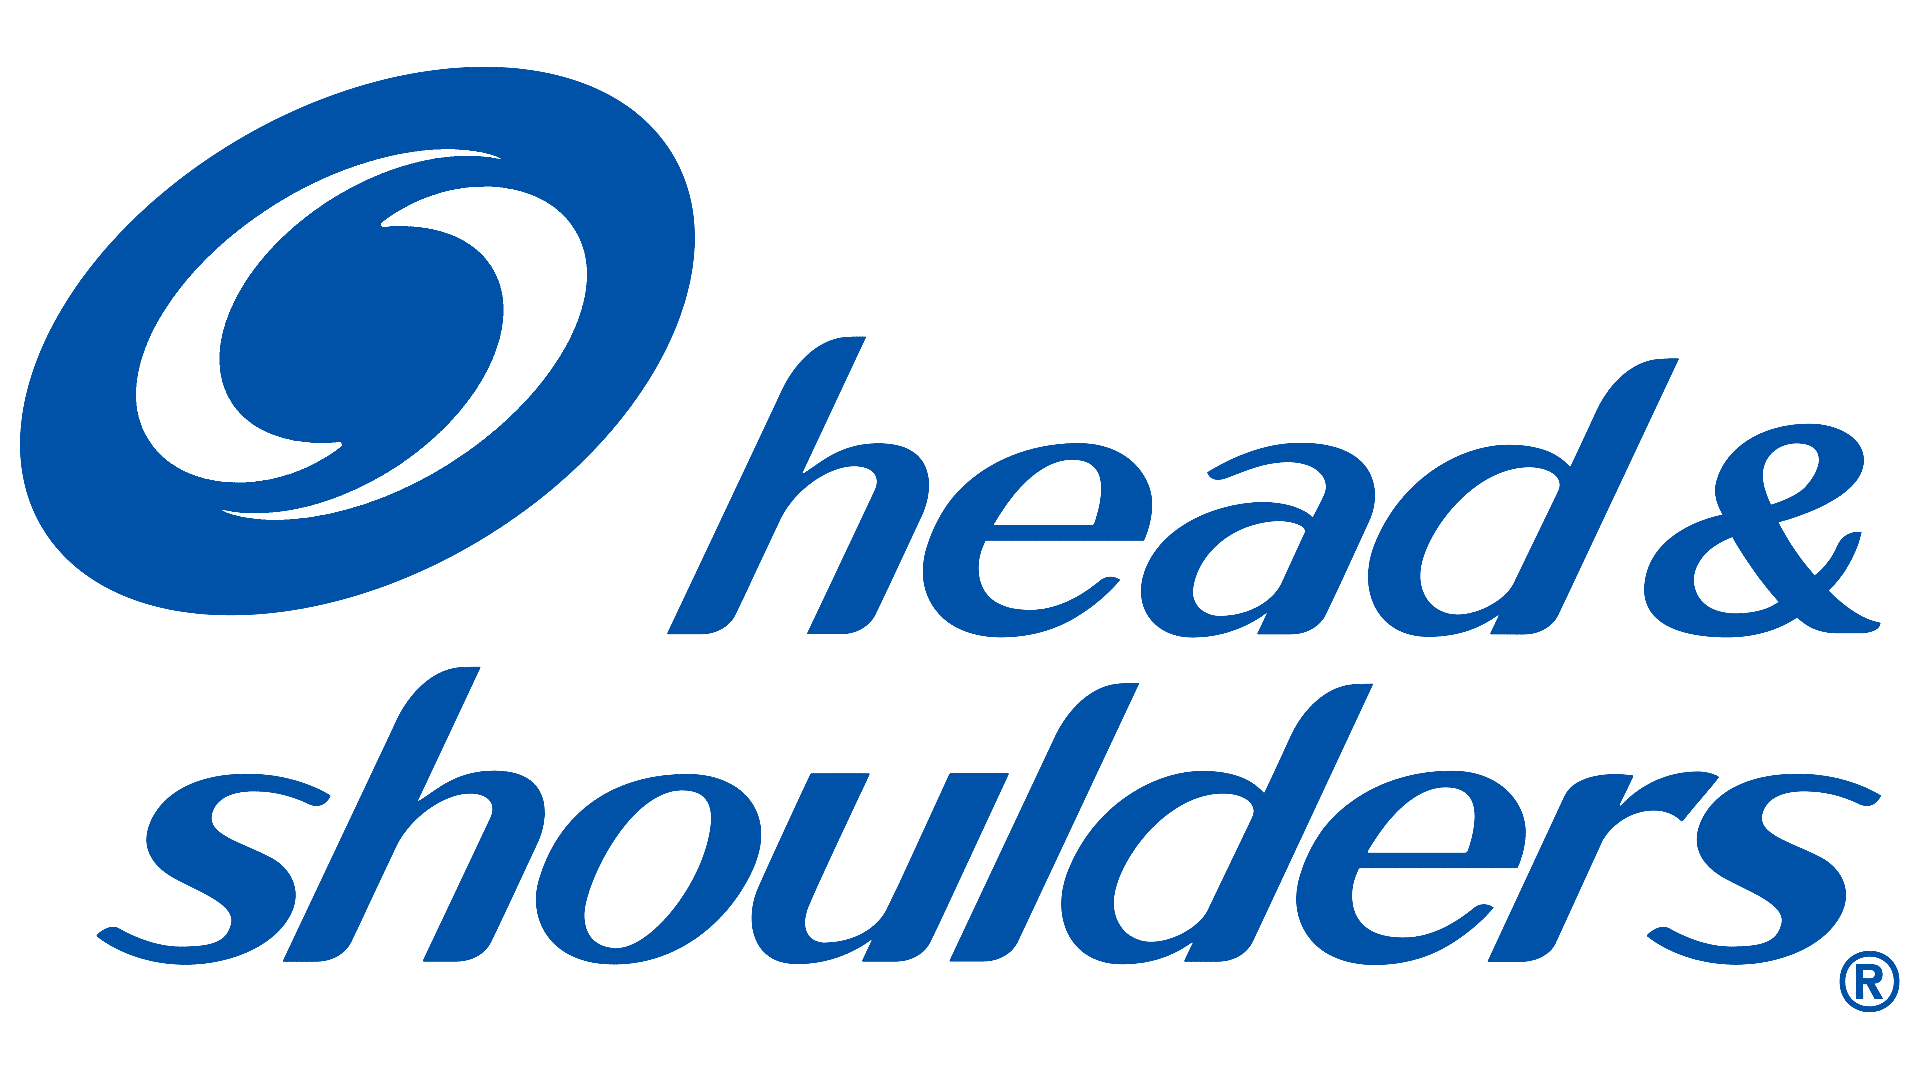 Brand: Head & Shoulders